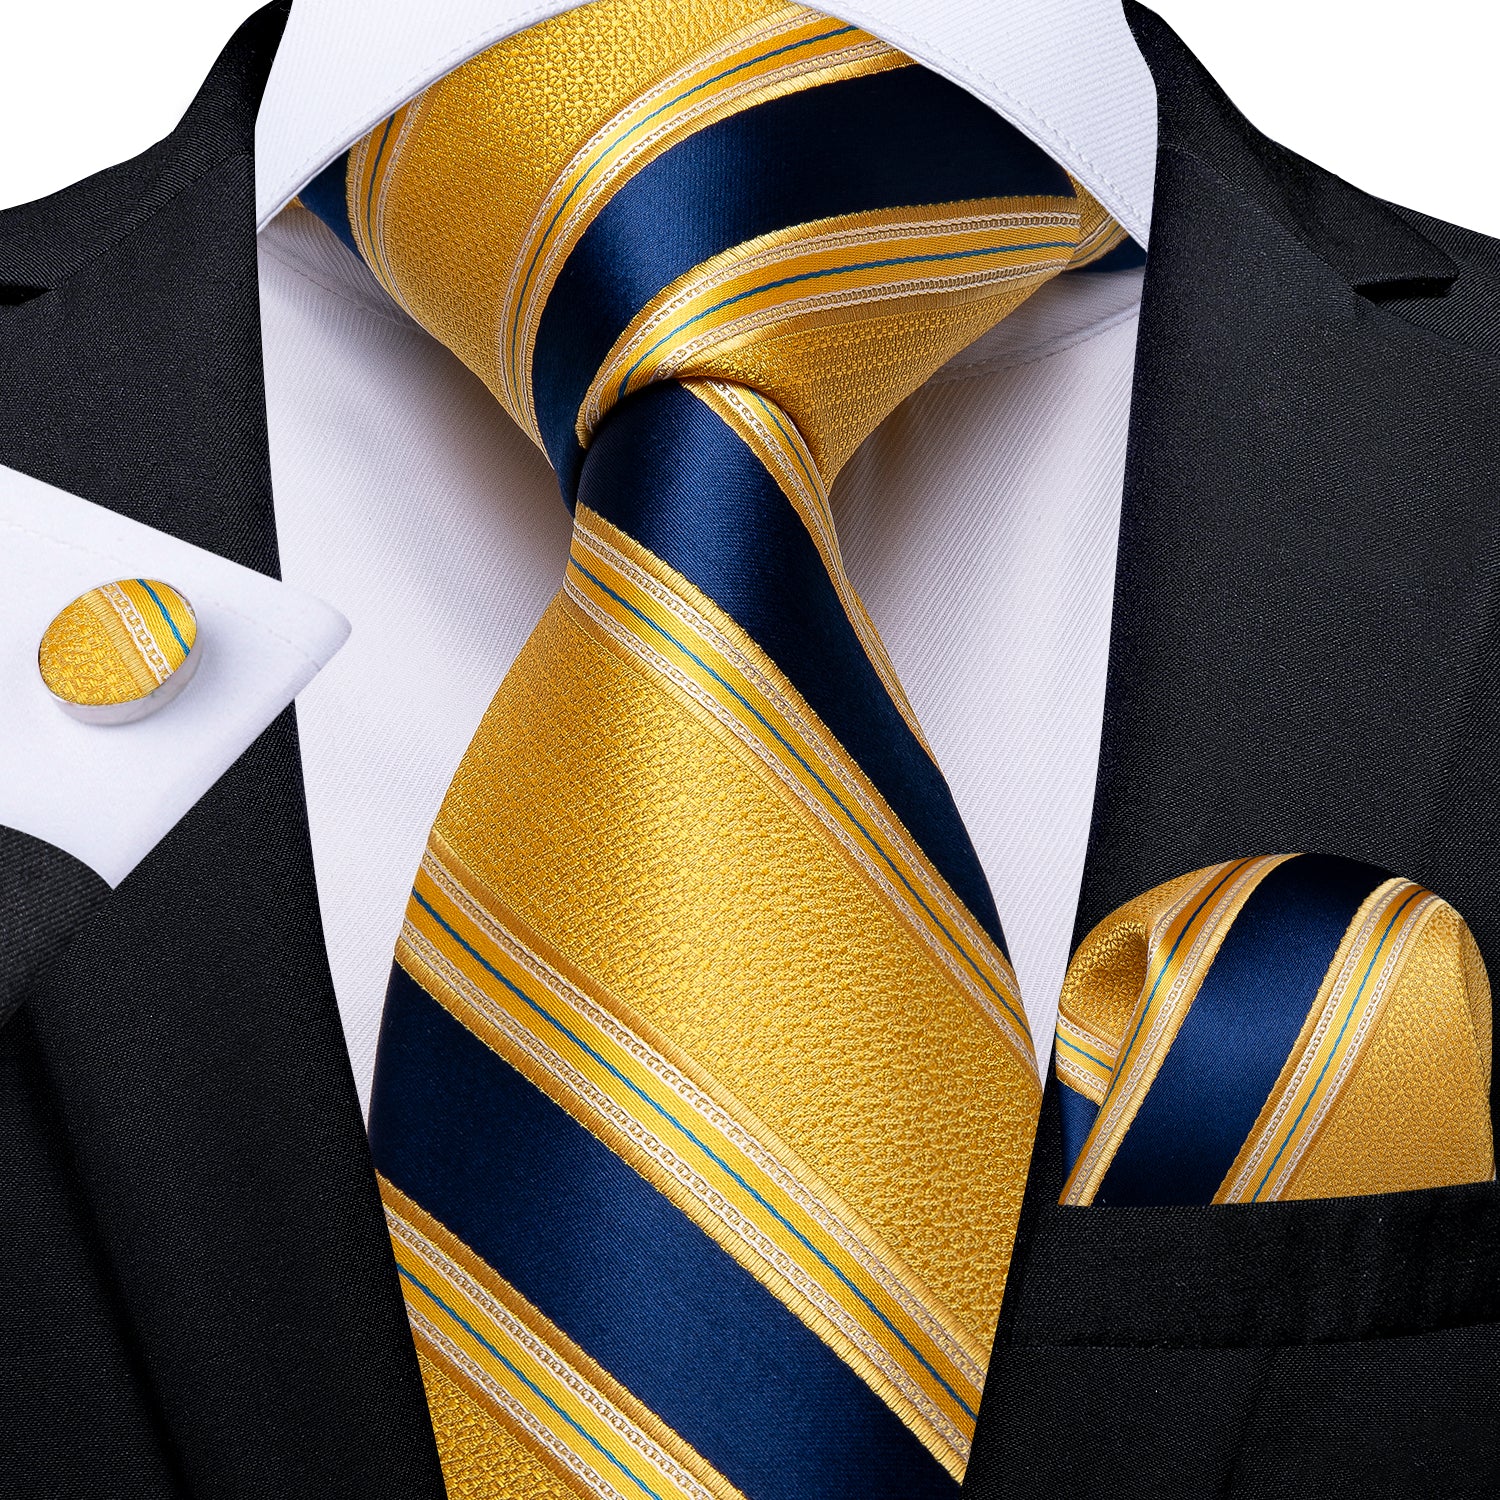 Ties2you Striped Tie Light Yellow Blue Men's Necktie Pocket Square Cufflinks Set New Hot